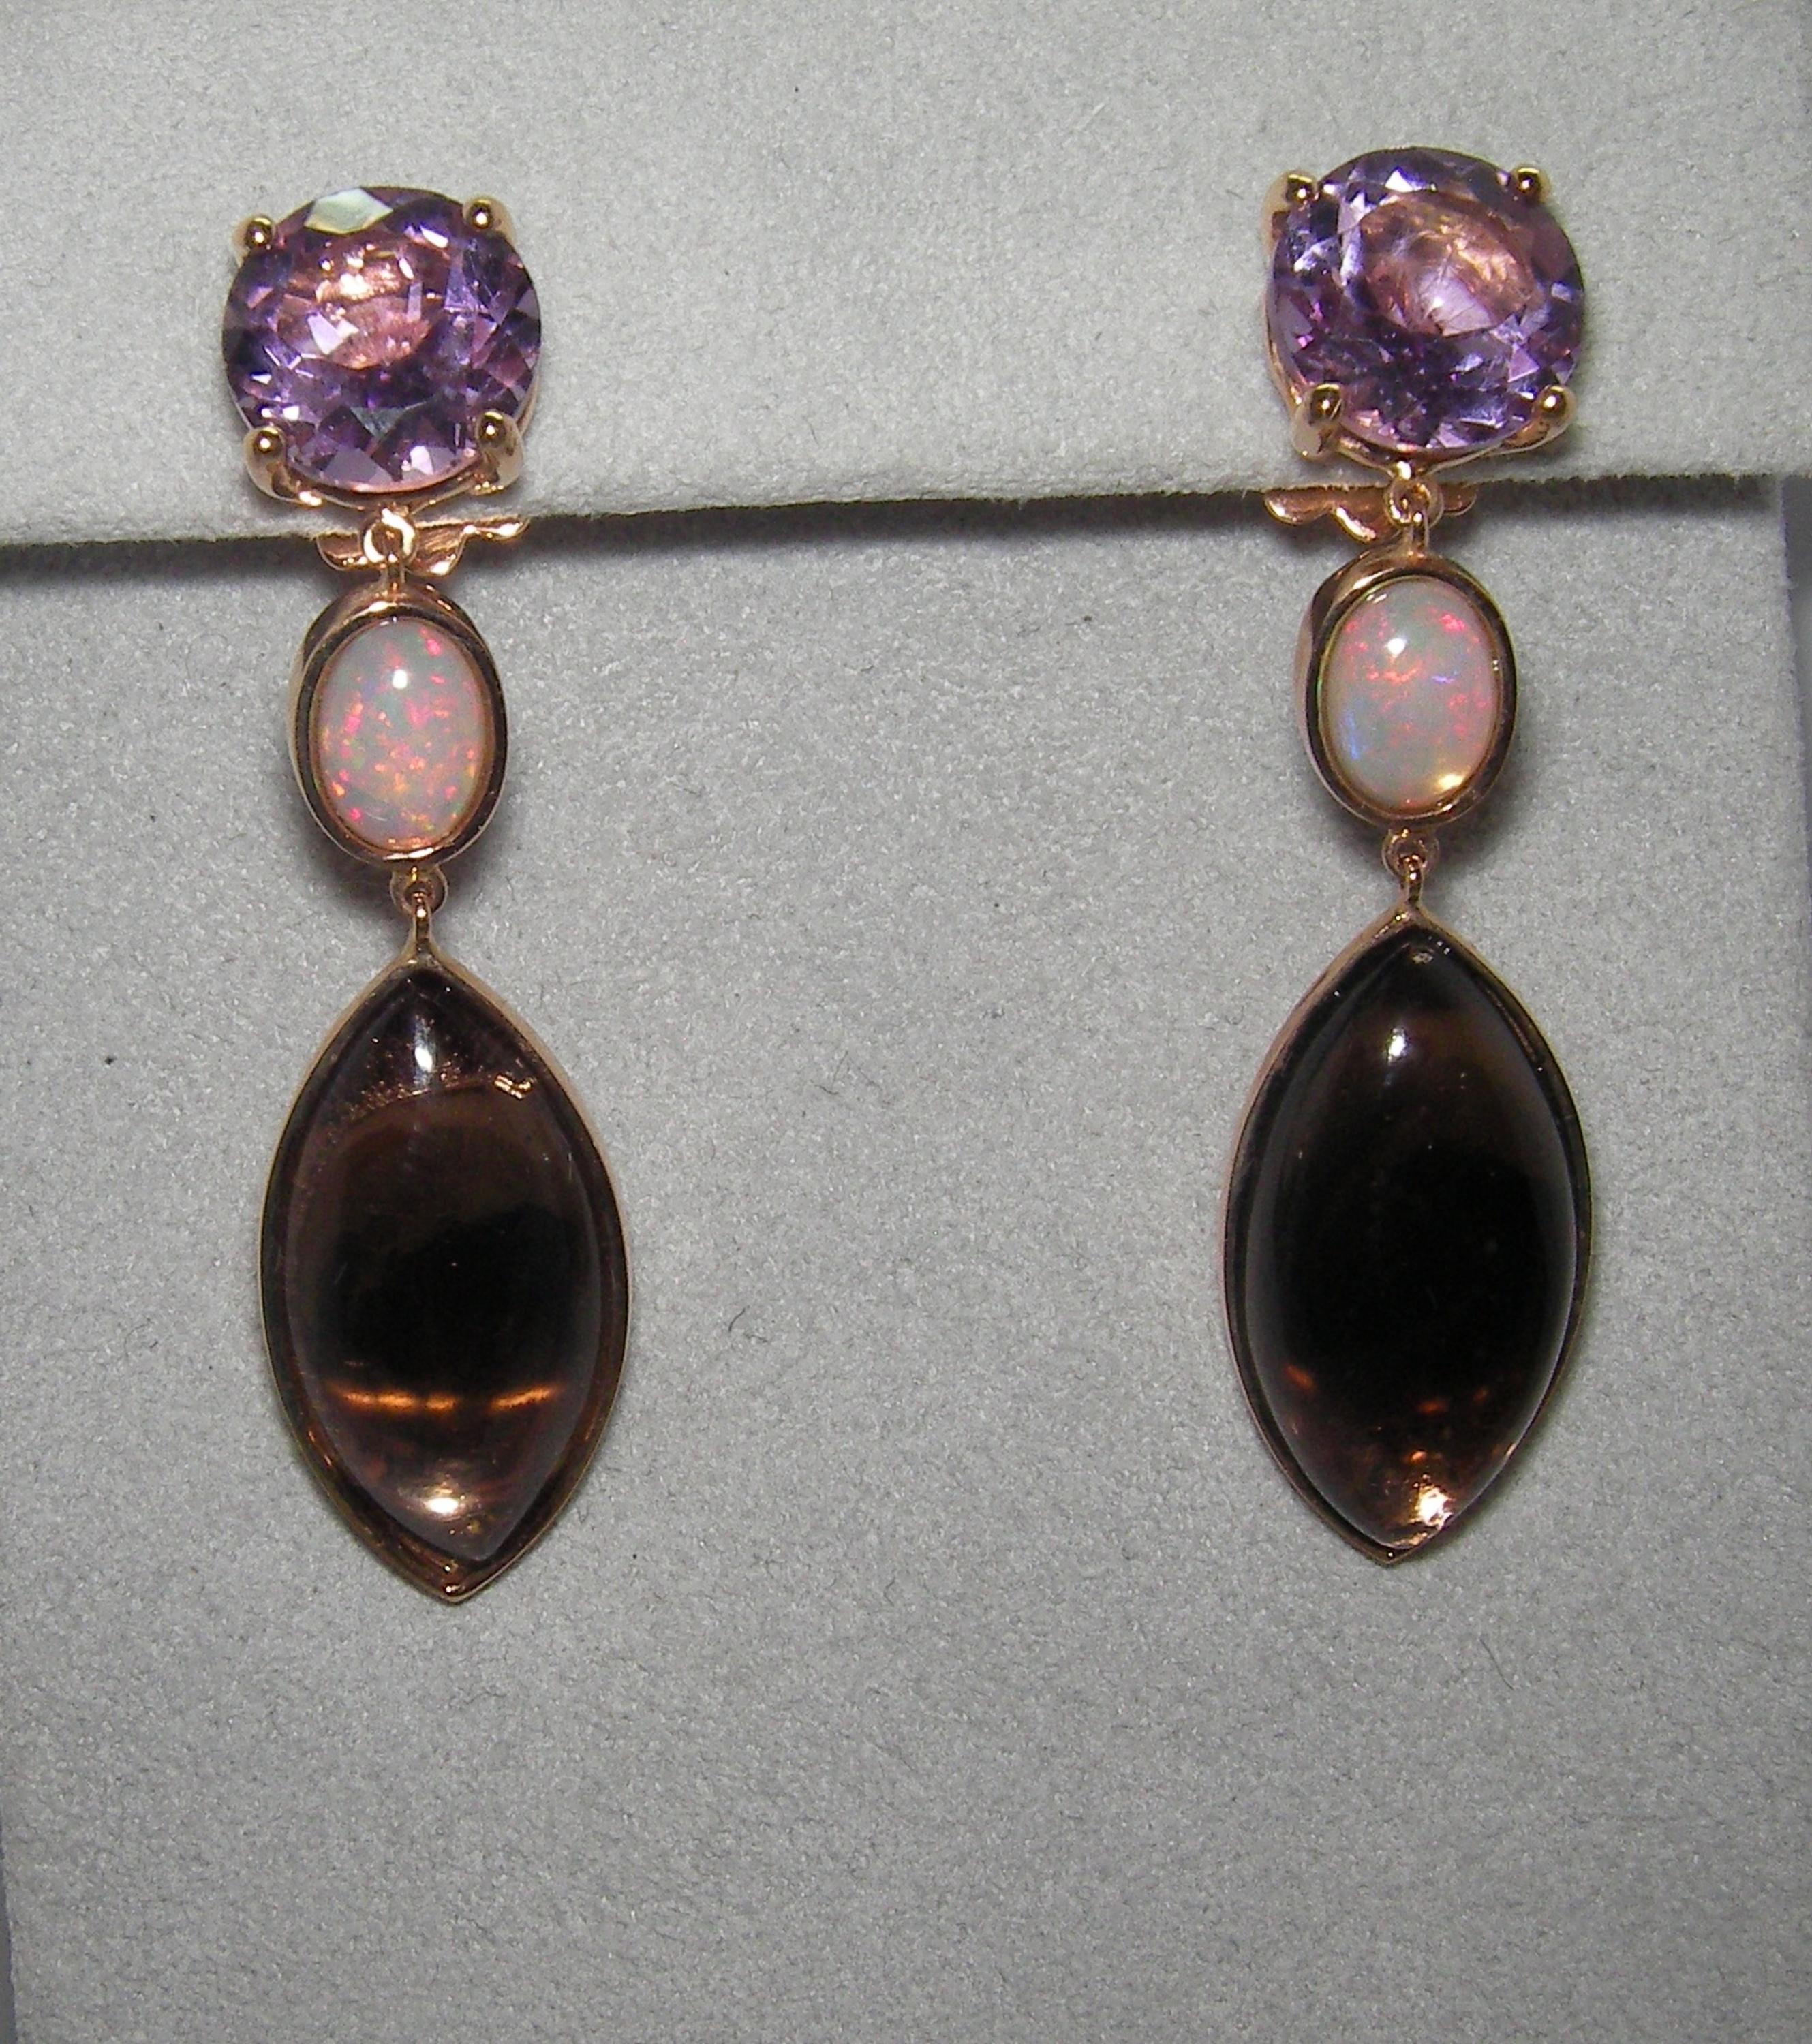 opal and amethyst earrings